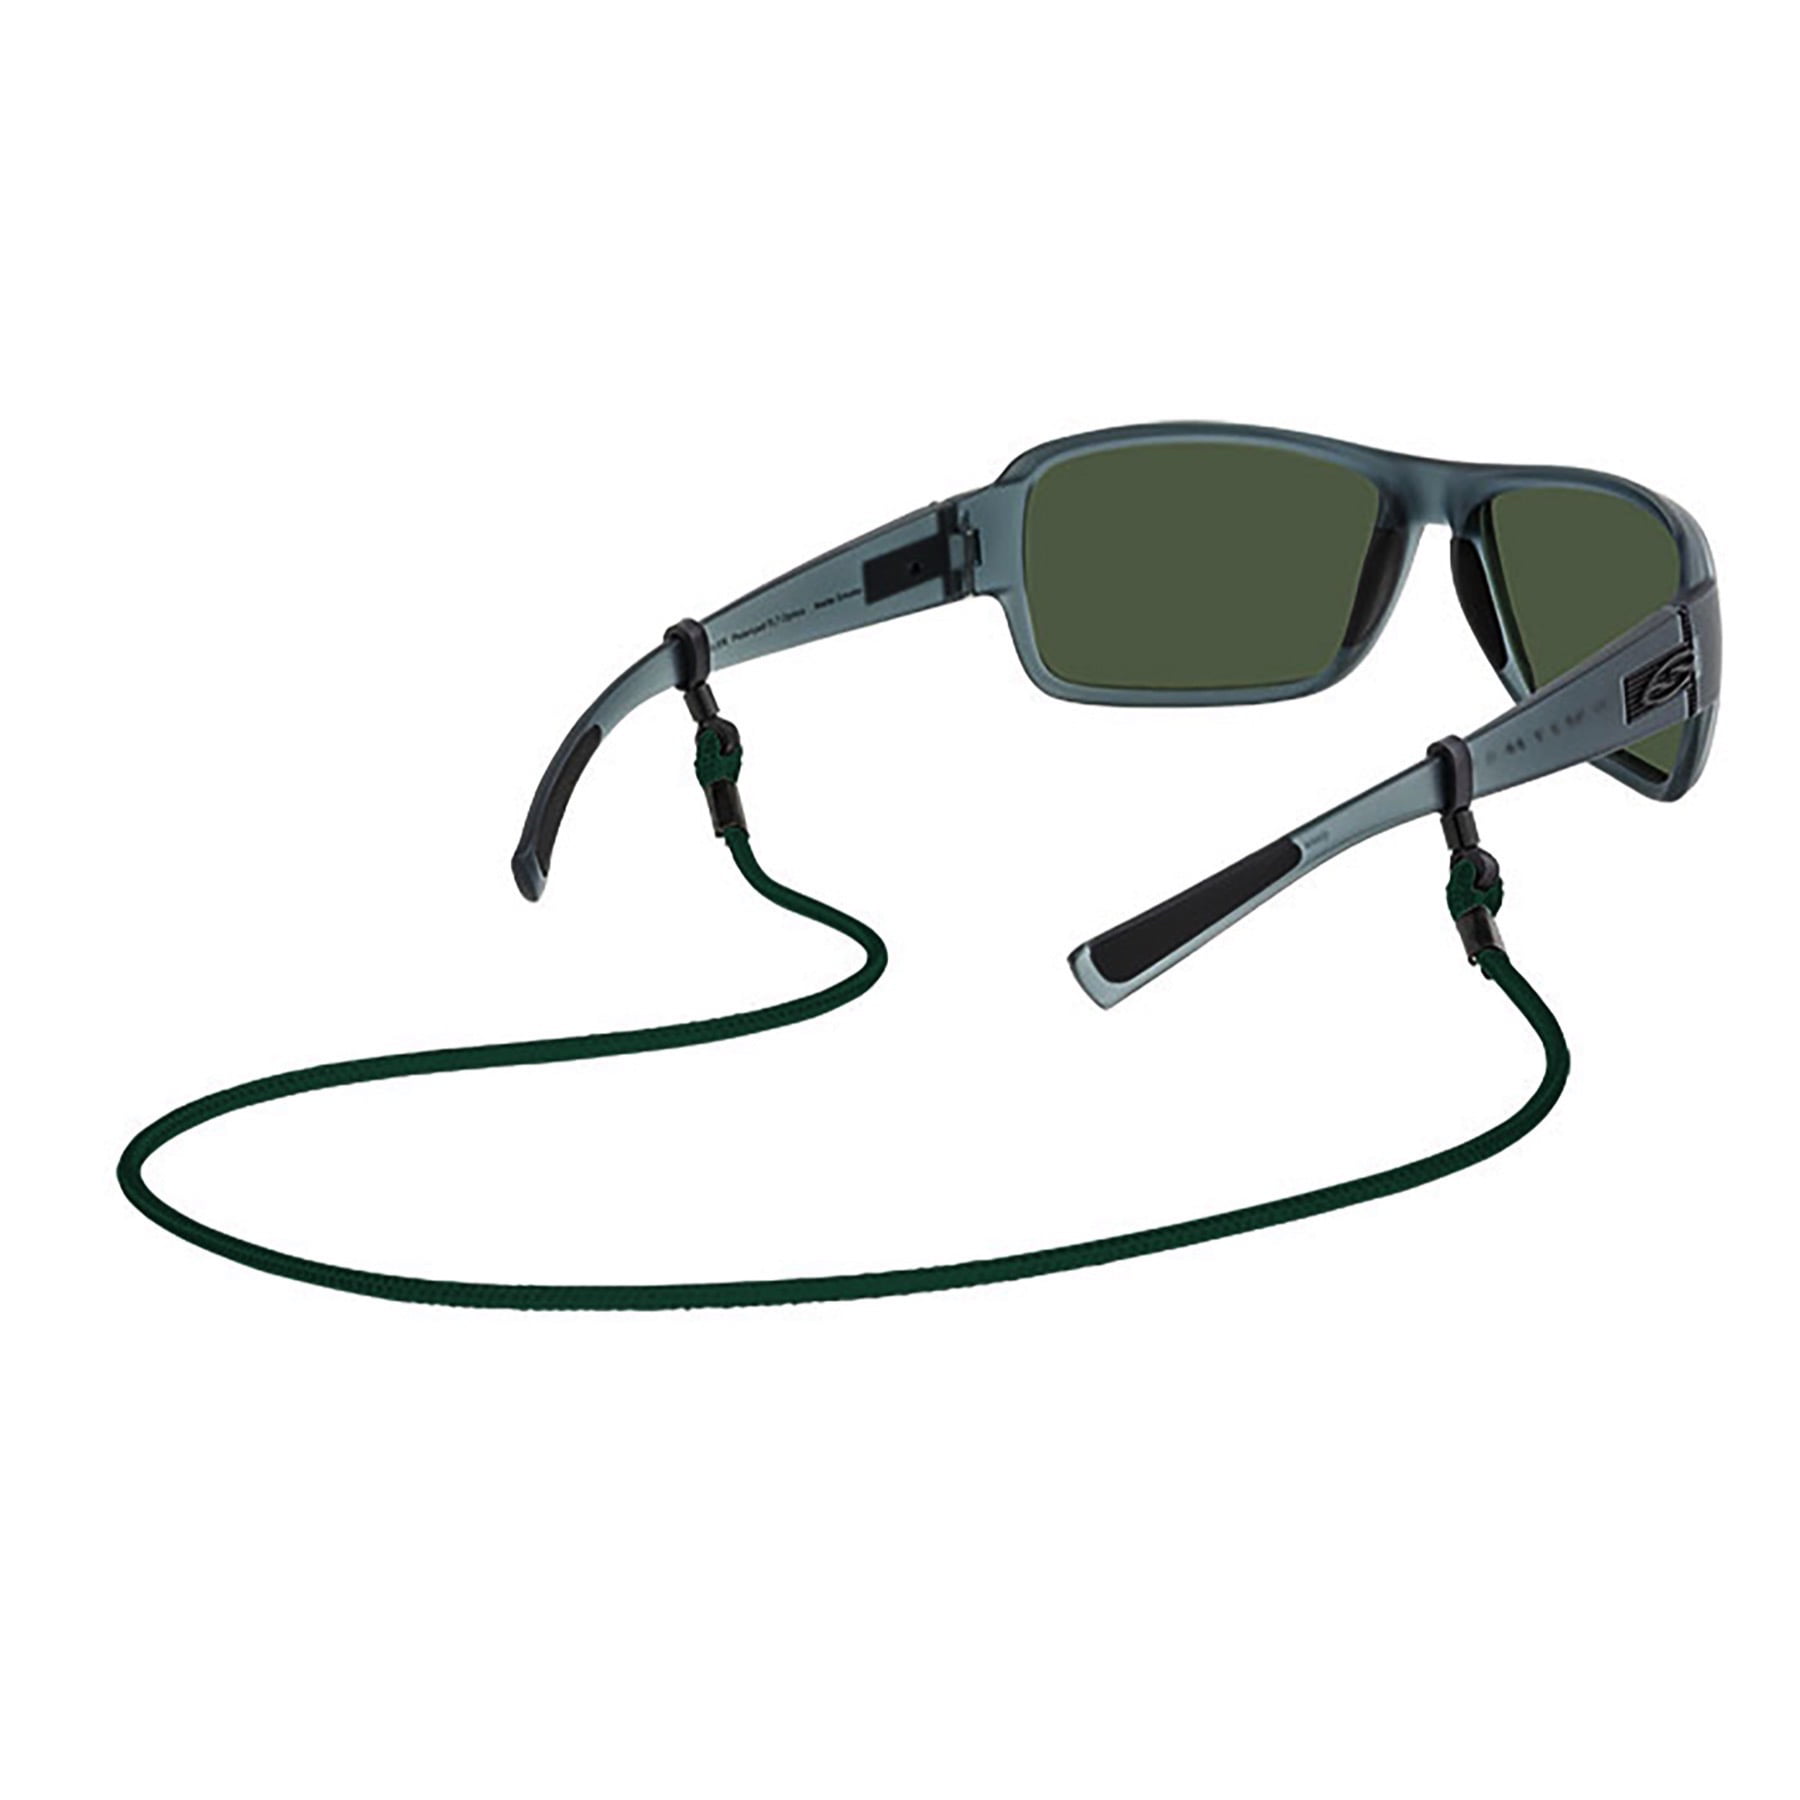 Chums Outdoor Land Sunglasses Retainer Skate Surf Eyewear Sticker/Decal 3.5" 